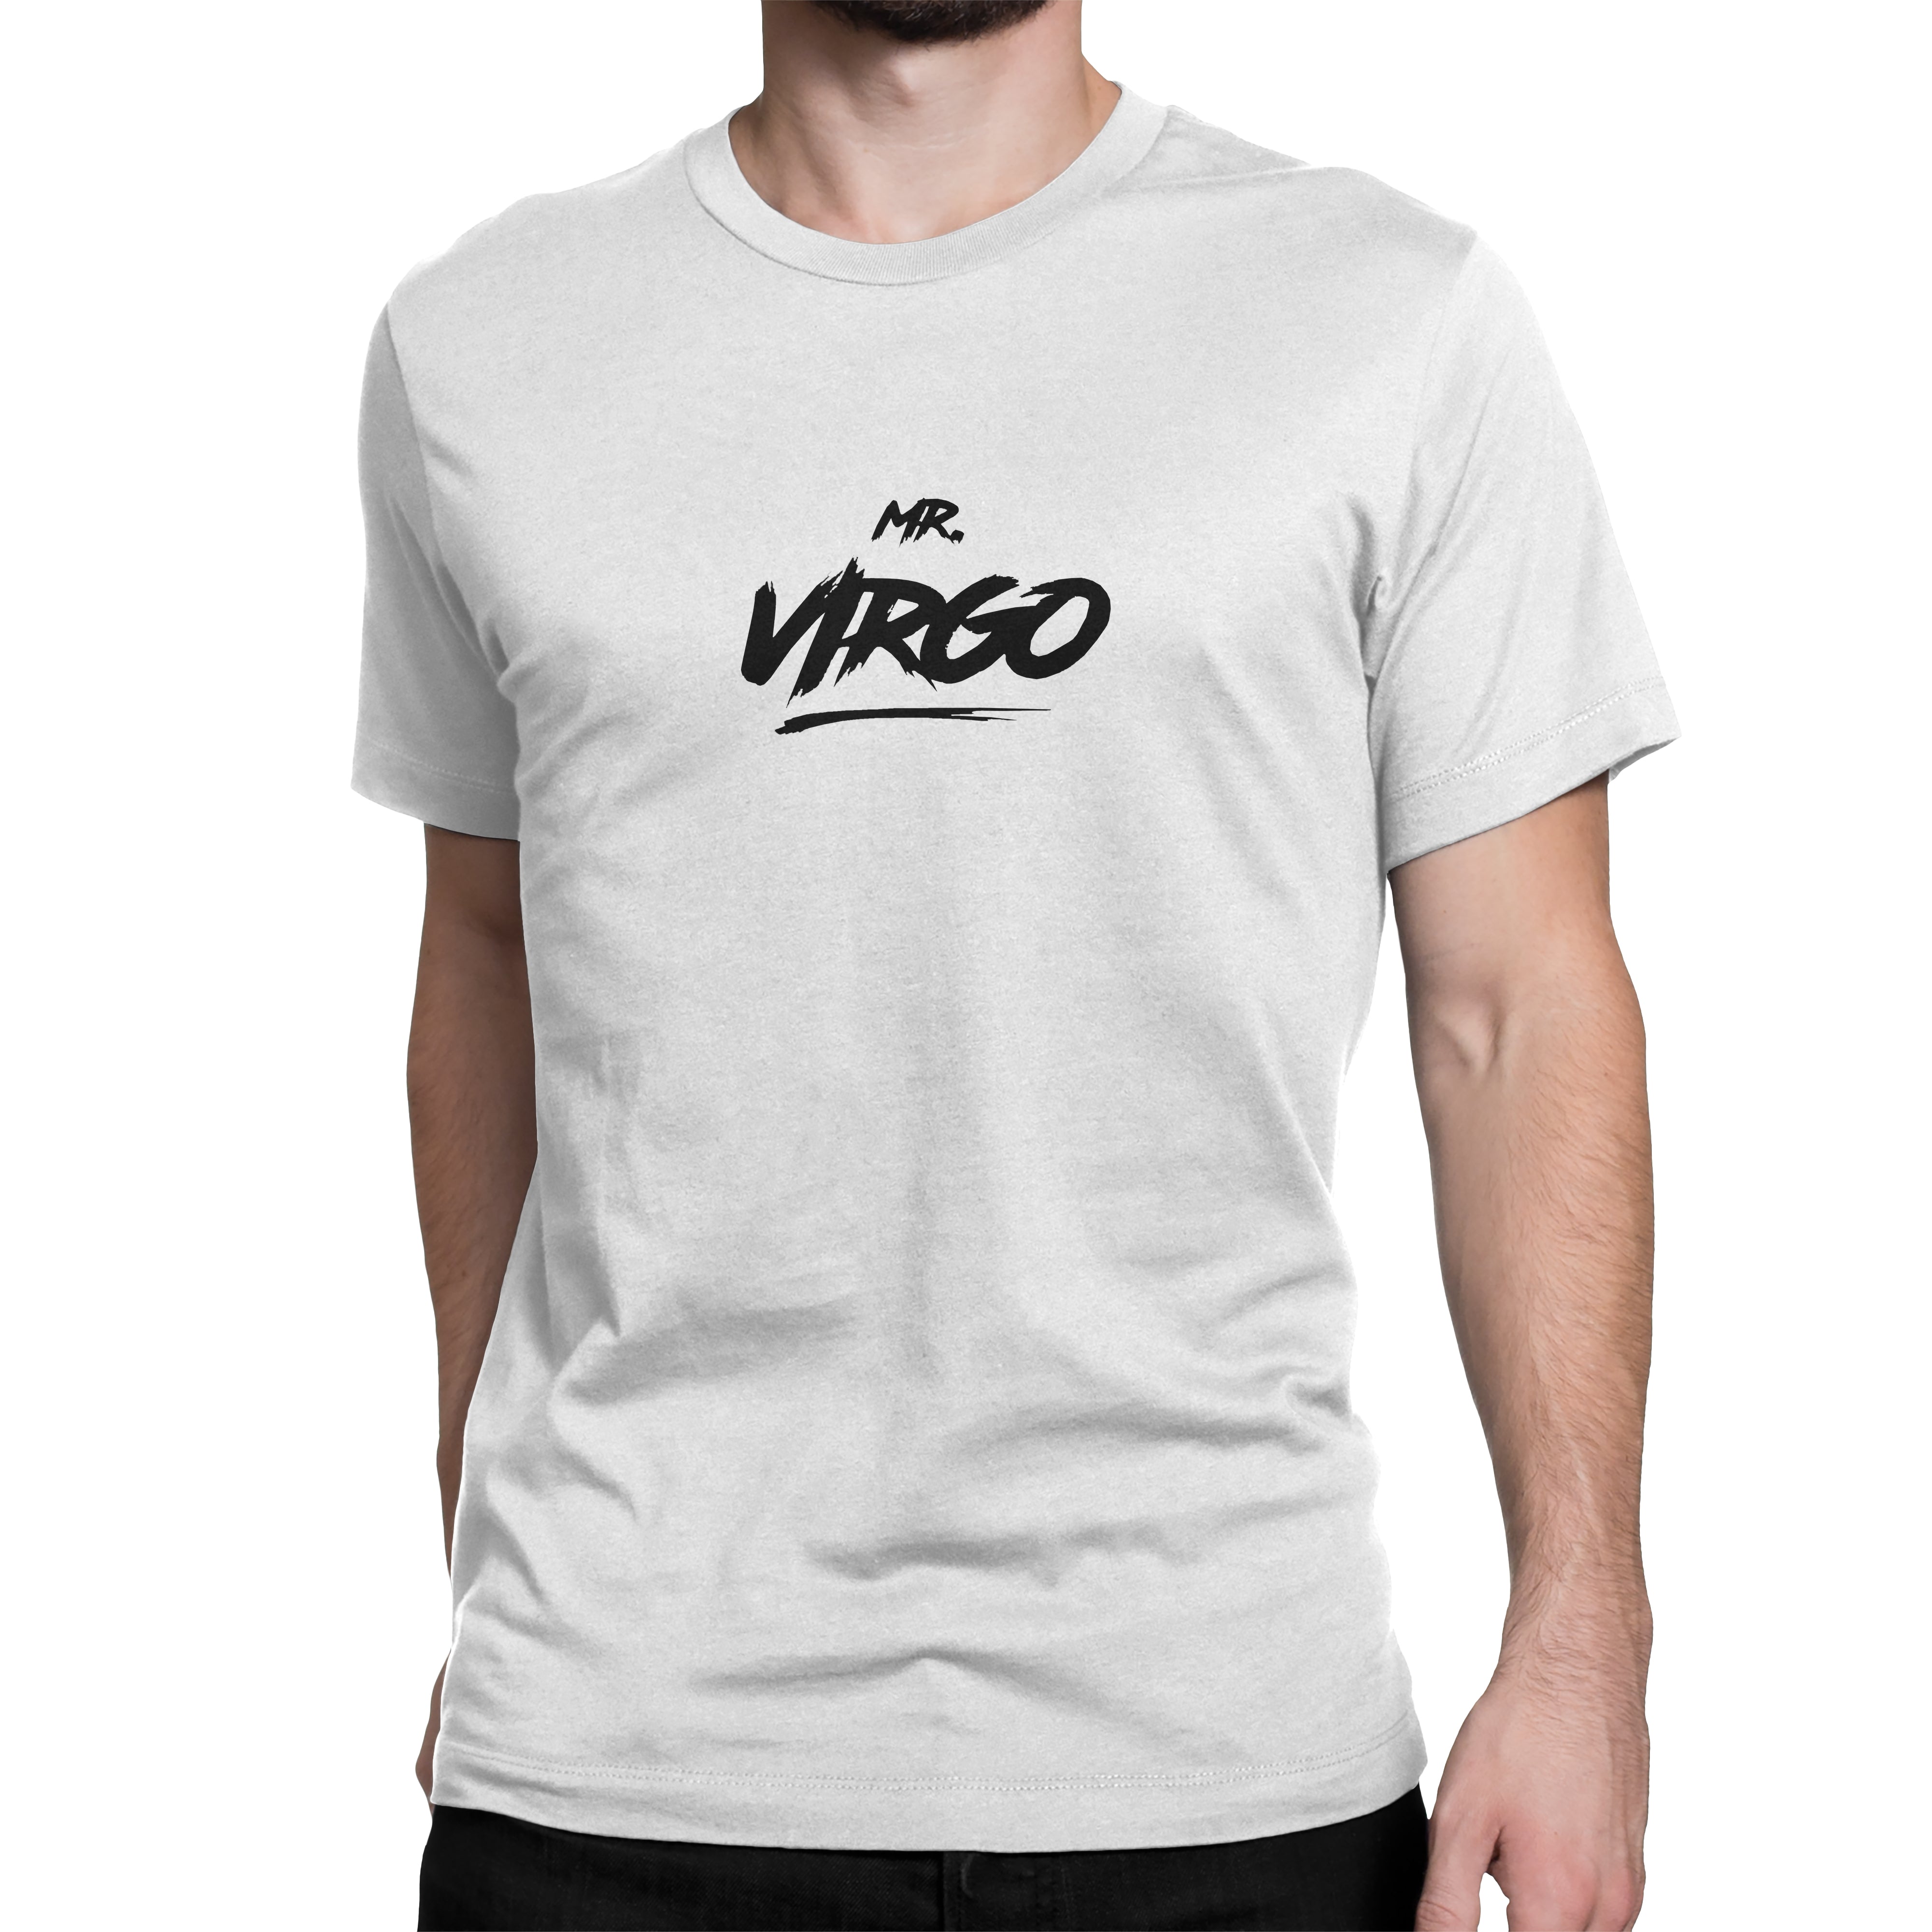 Mr Virgo Hats Shirt T Records No Hoods – No